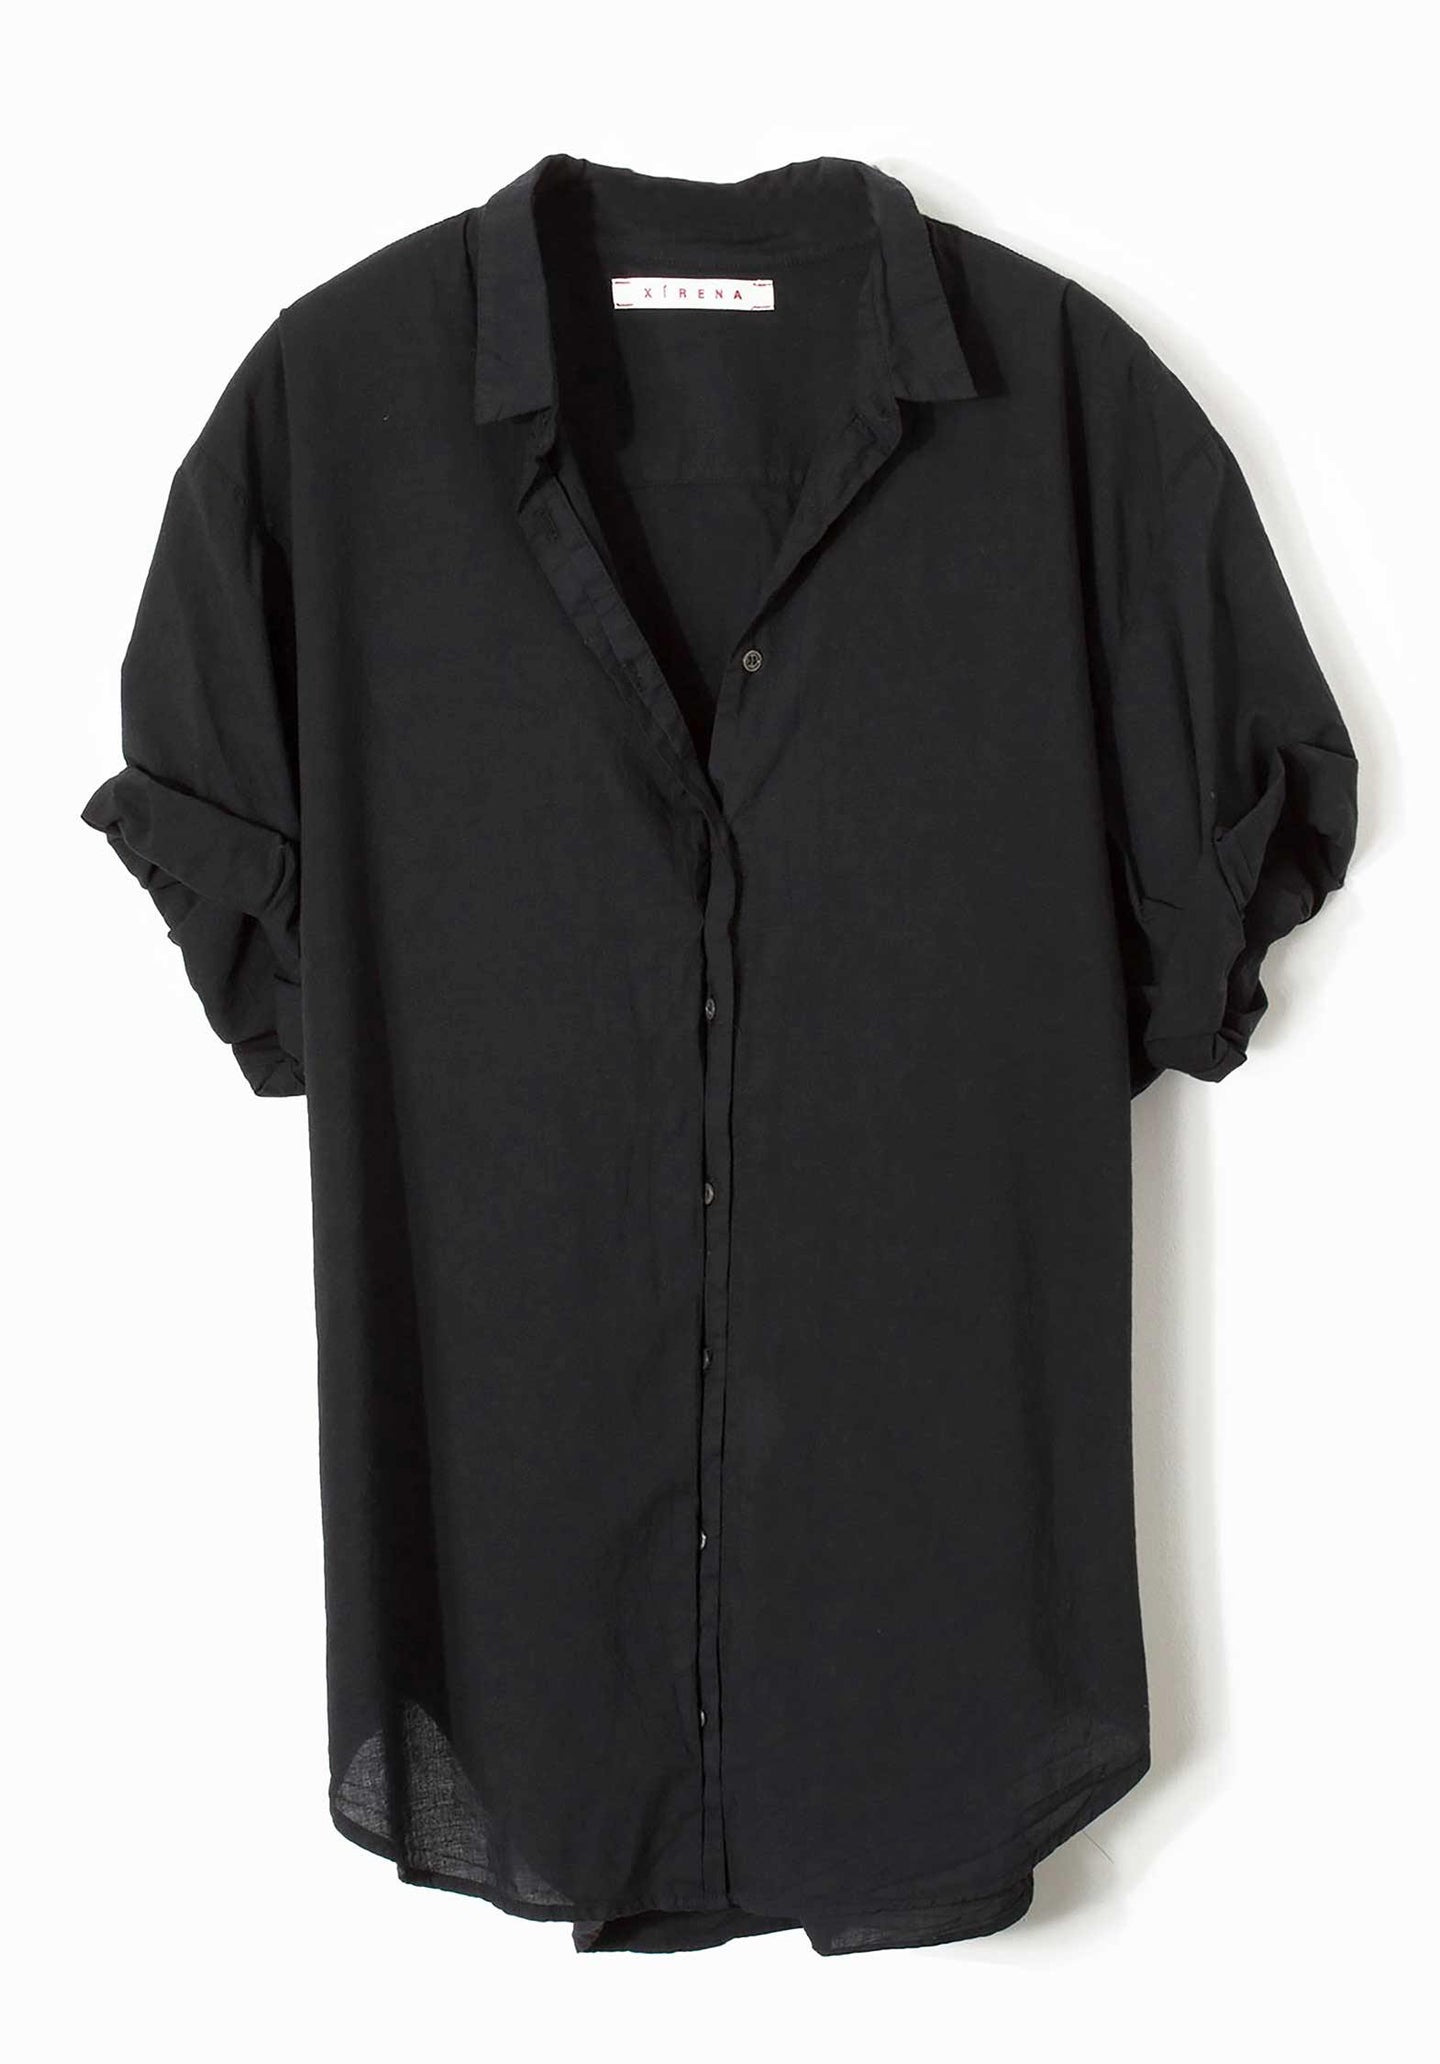 'Channing' Short Sleeves Cotton Shirt Black - RUE MADAME | BOUTIQUE PARISIENNE